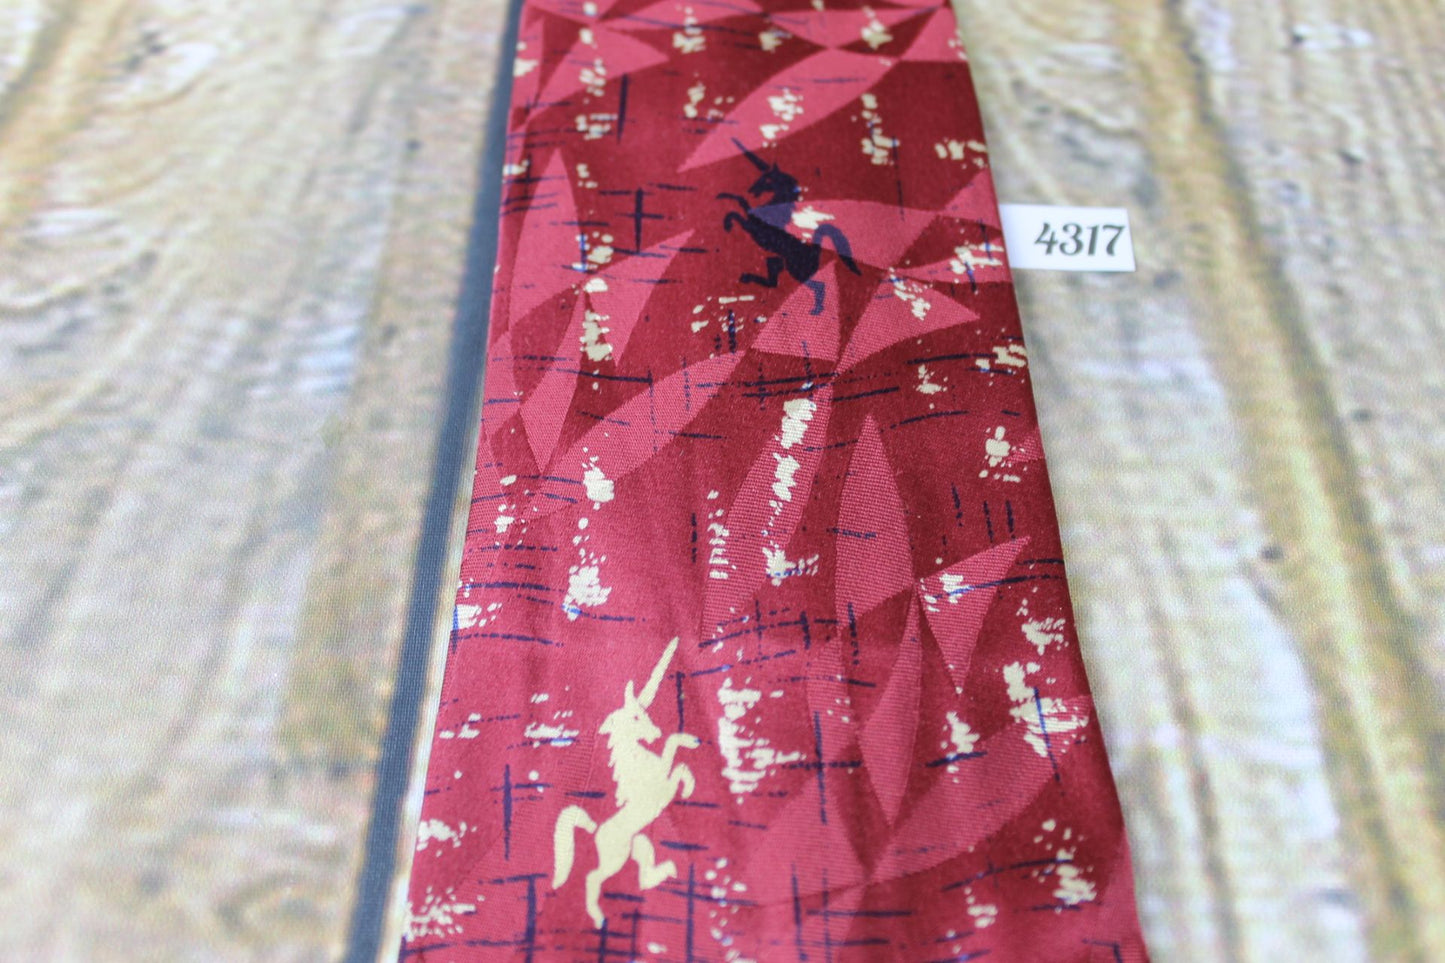 Superb Vintage 1940s/1950s Rothschild Pure Silk Burgundy Unicorn Tie Lindy hop Swing Zoot Suit Rat Pack